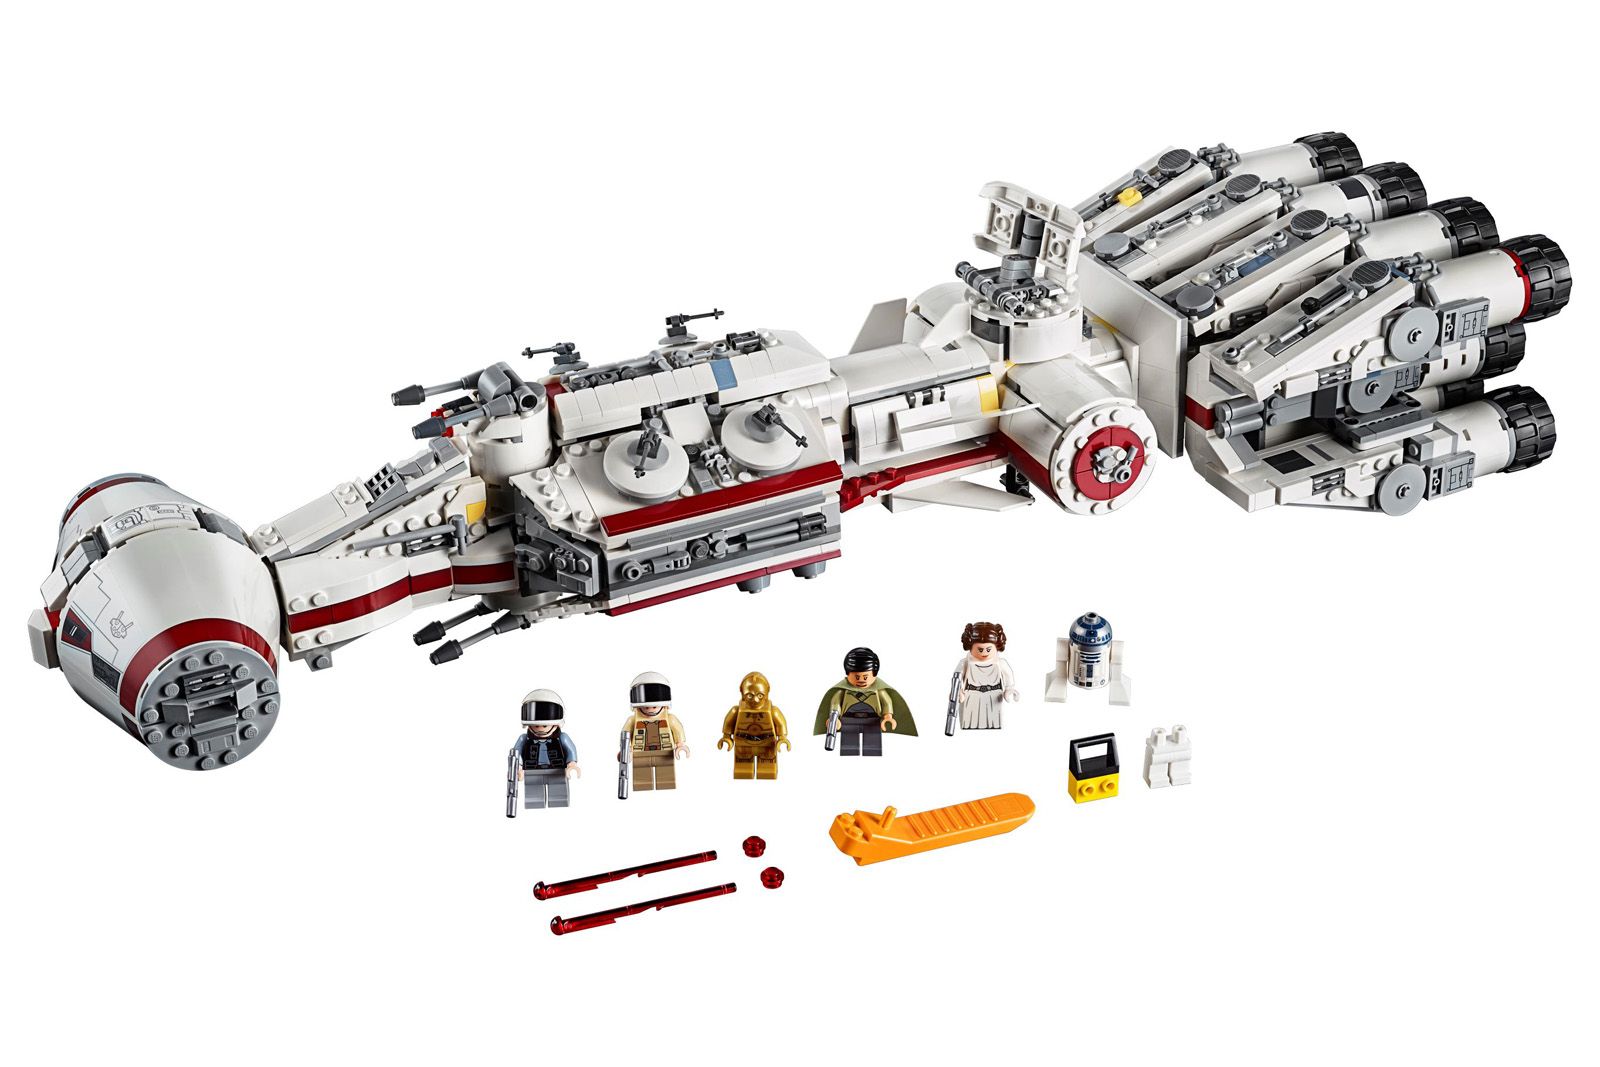 Lego Star Wars image 4